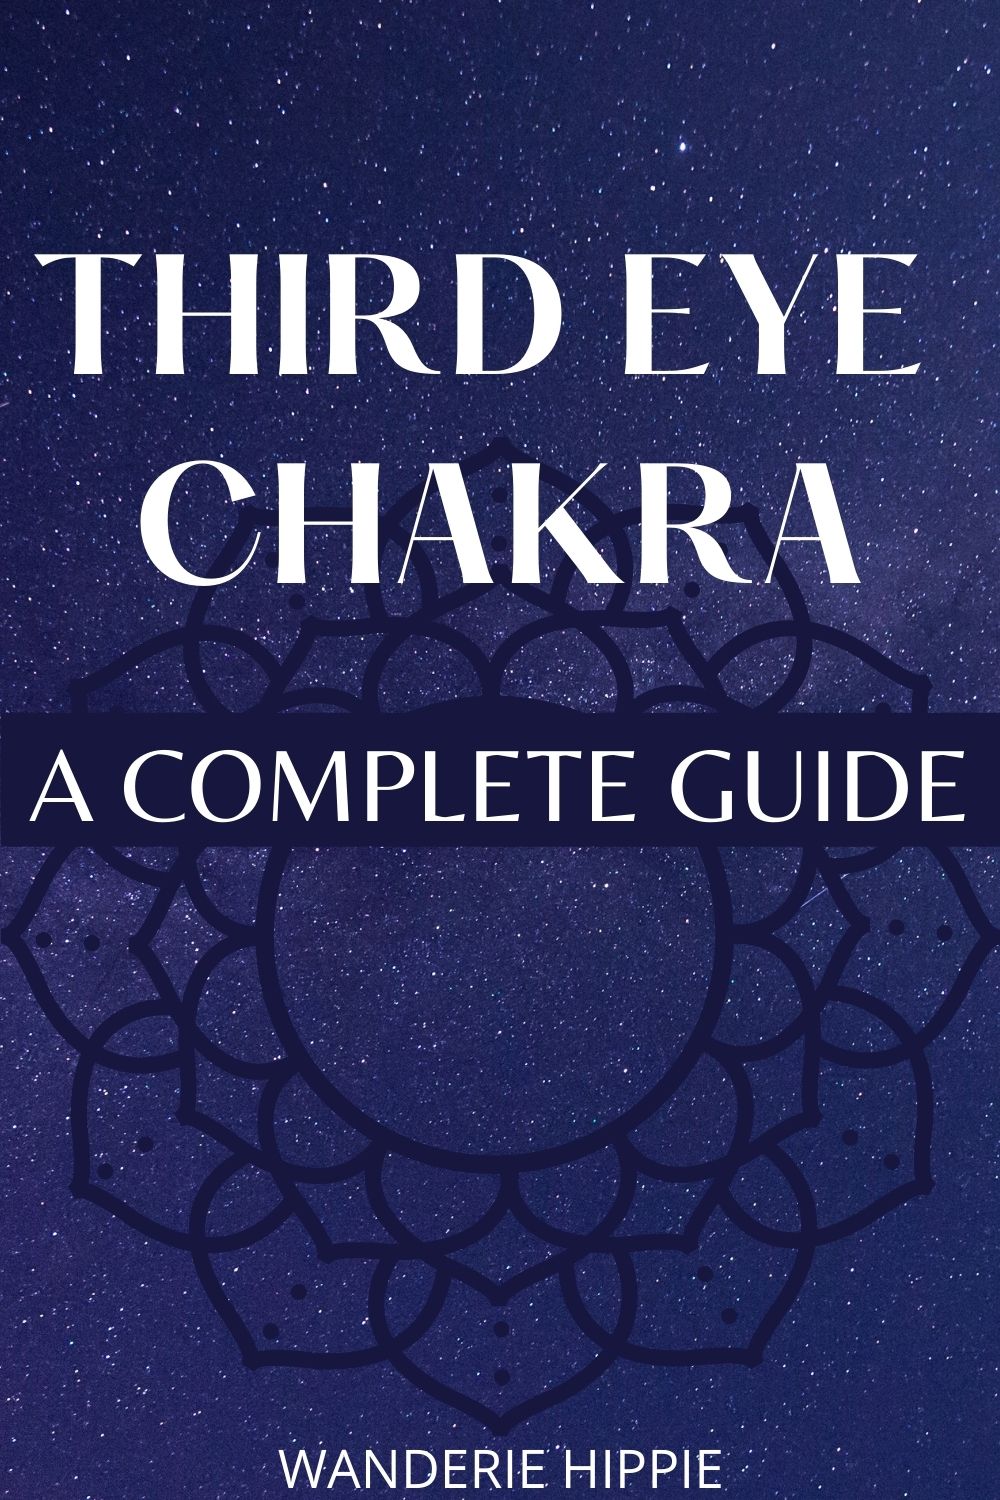 balance the third eye chakra